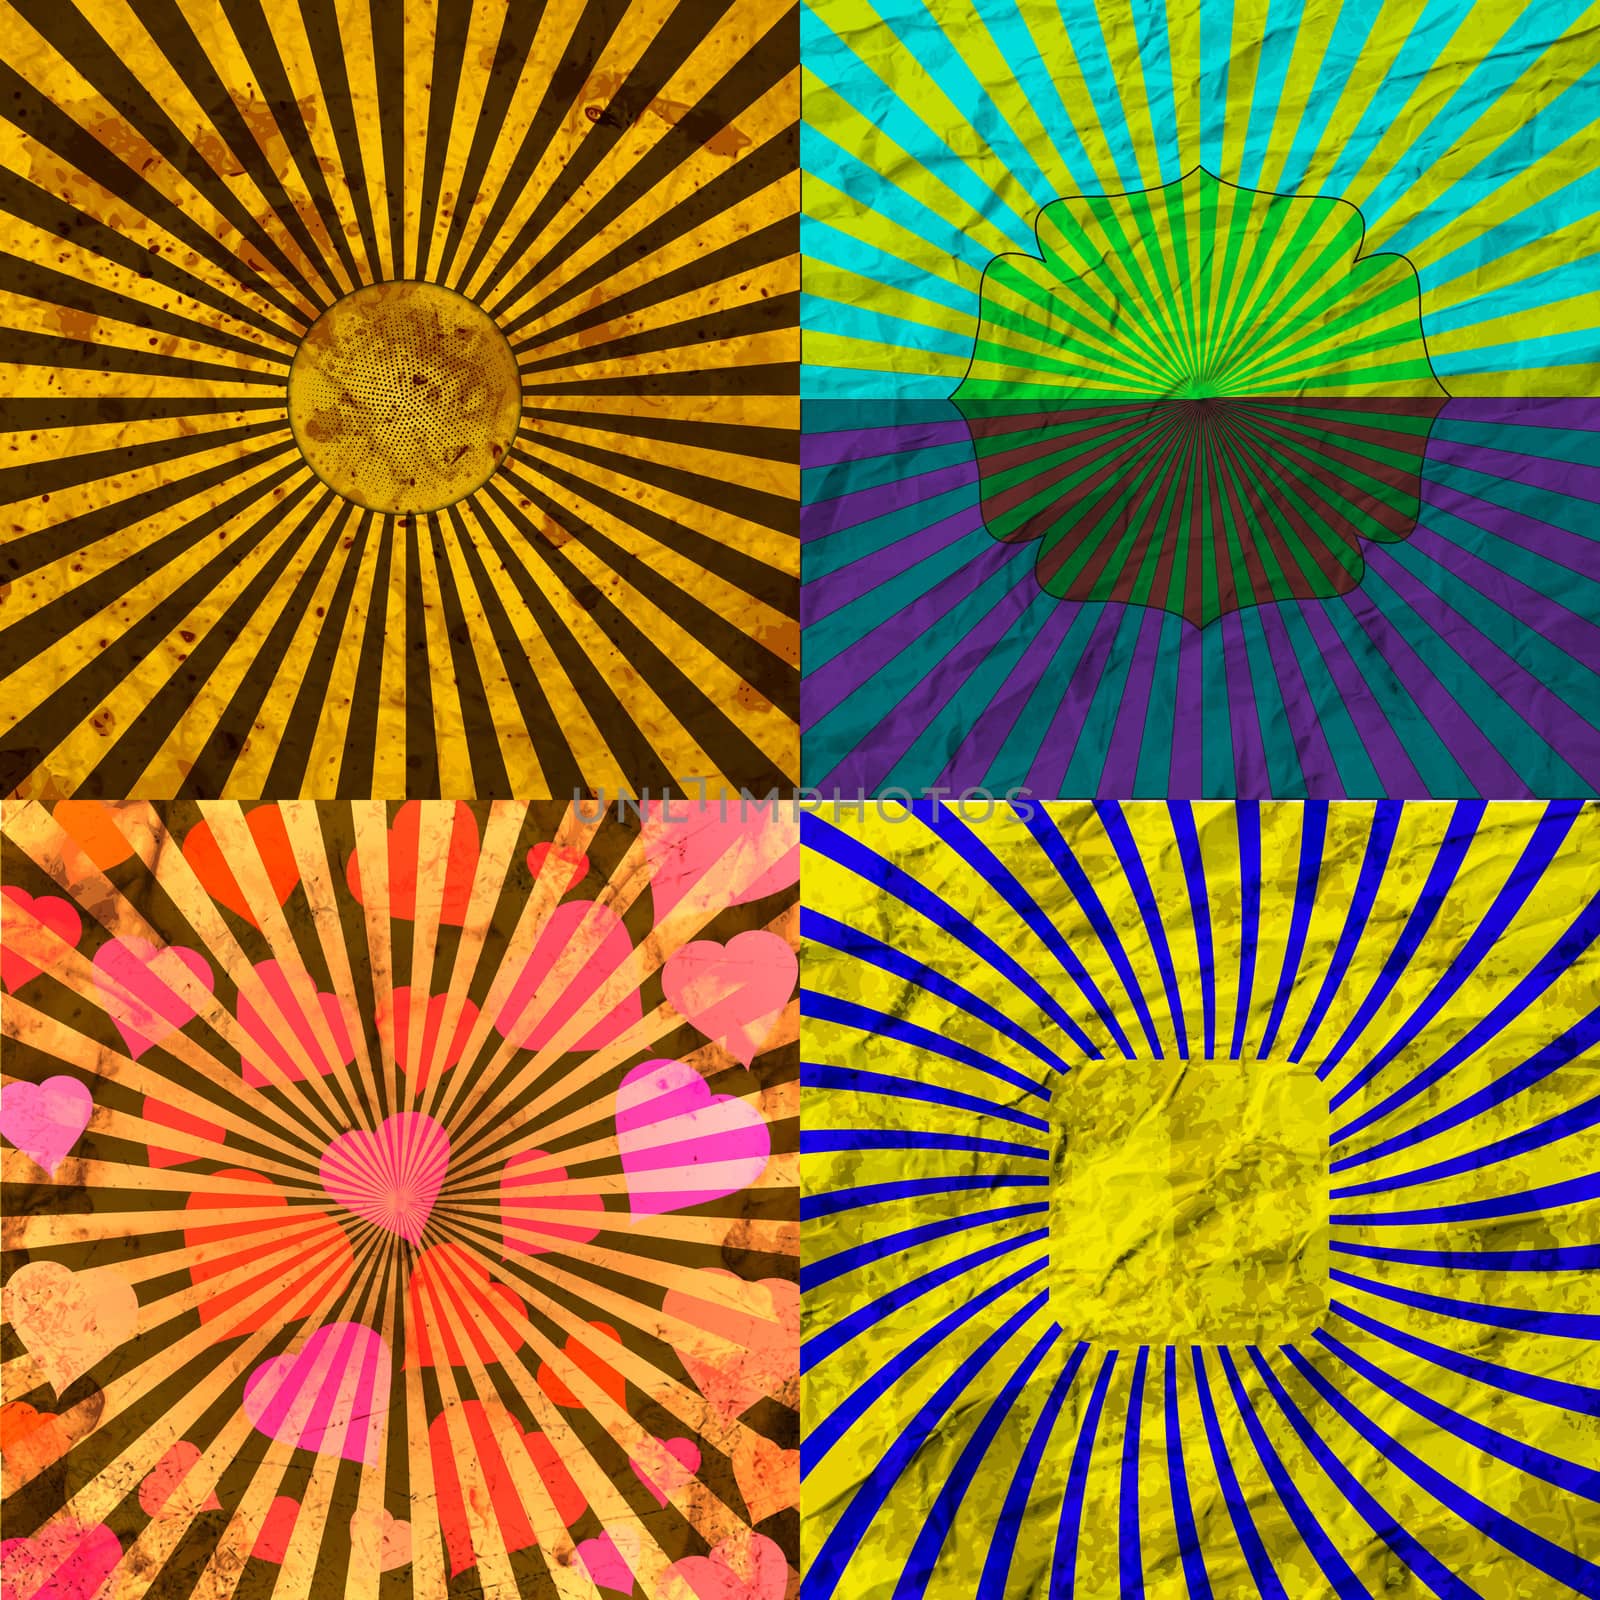 Set Vintage Colored Rays background. Raster illustration